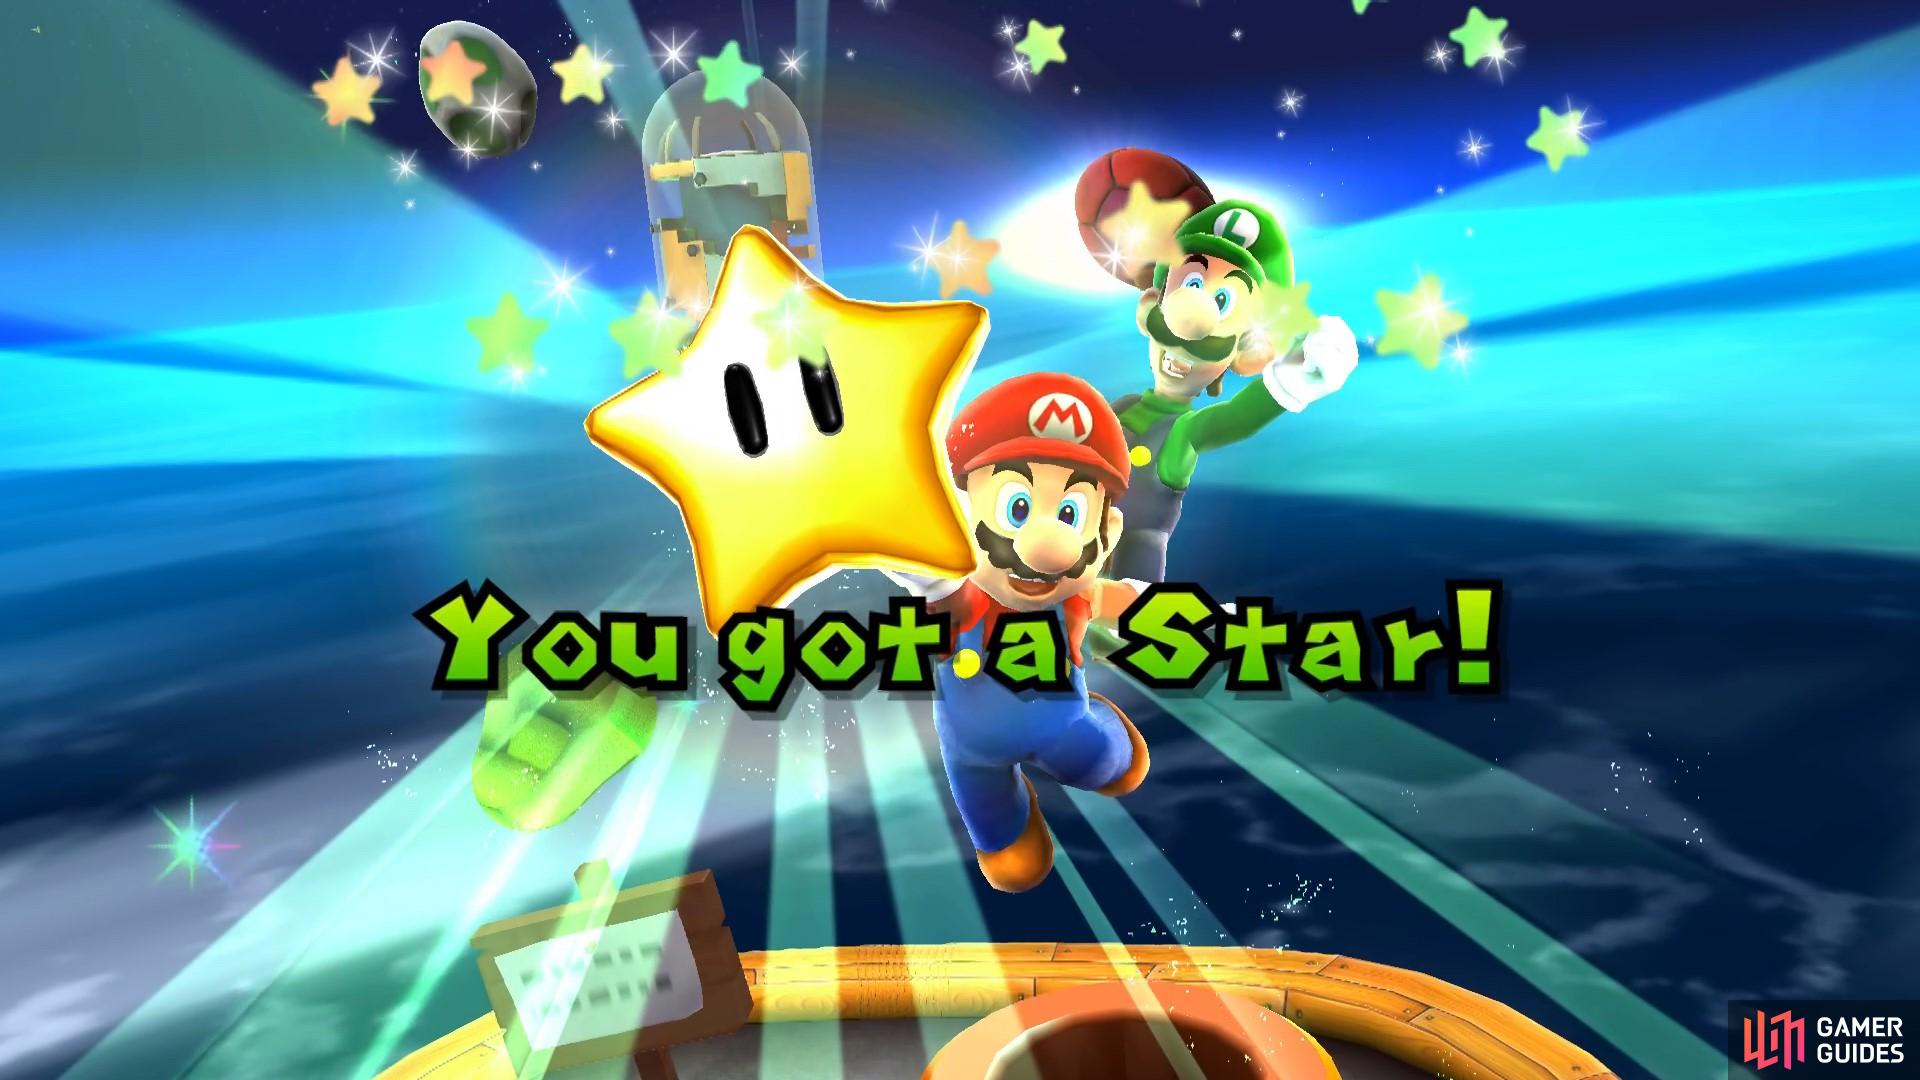 then talk to Luigi to grab the star!